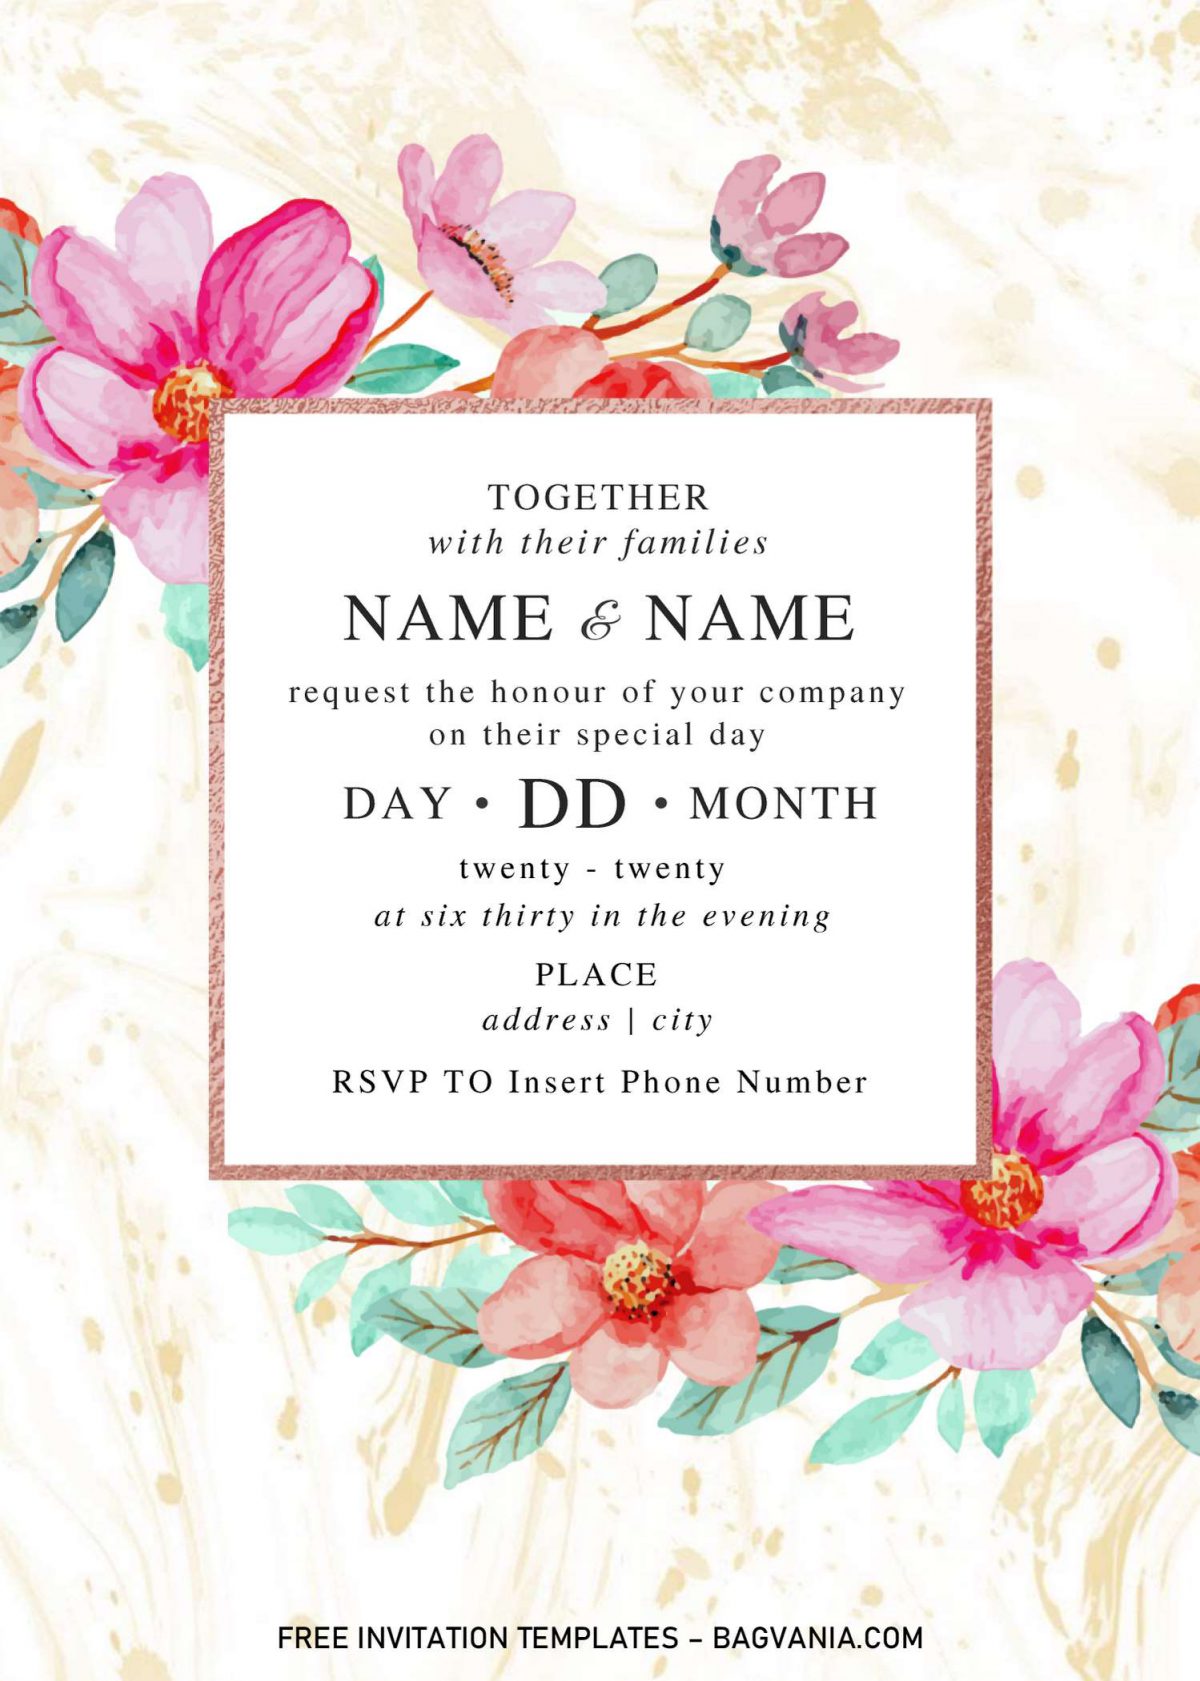 Festive Floral Wedding Invitation Templates - Editable With Microsoft Word and has custom square foliage frame